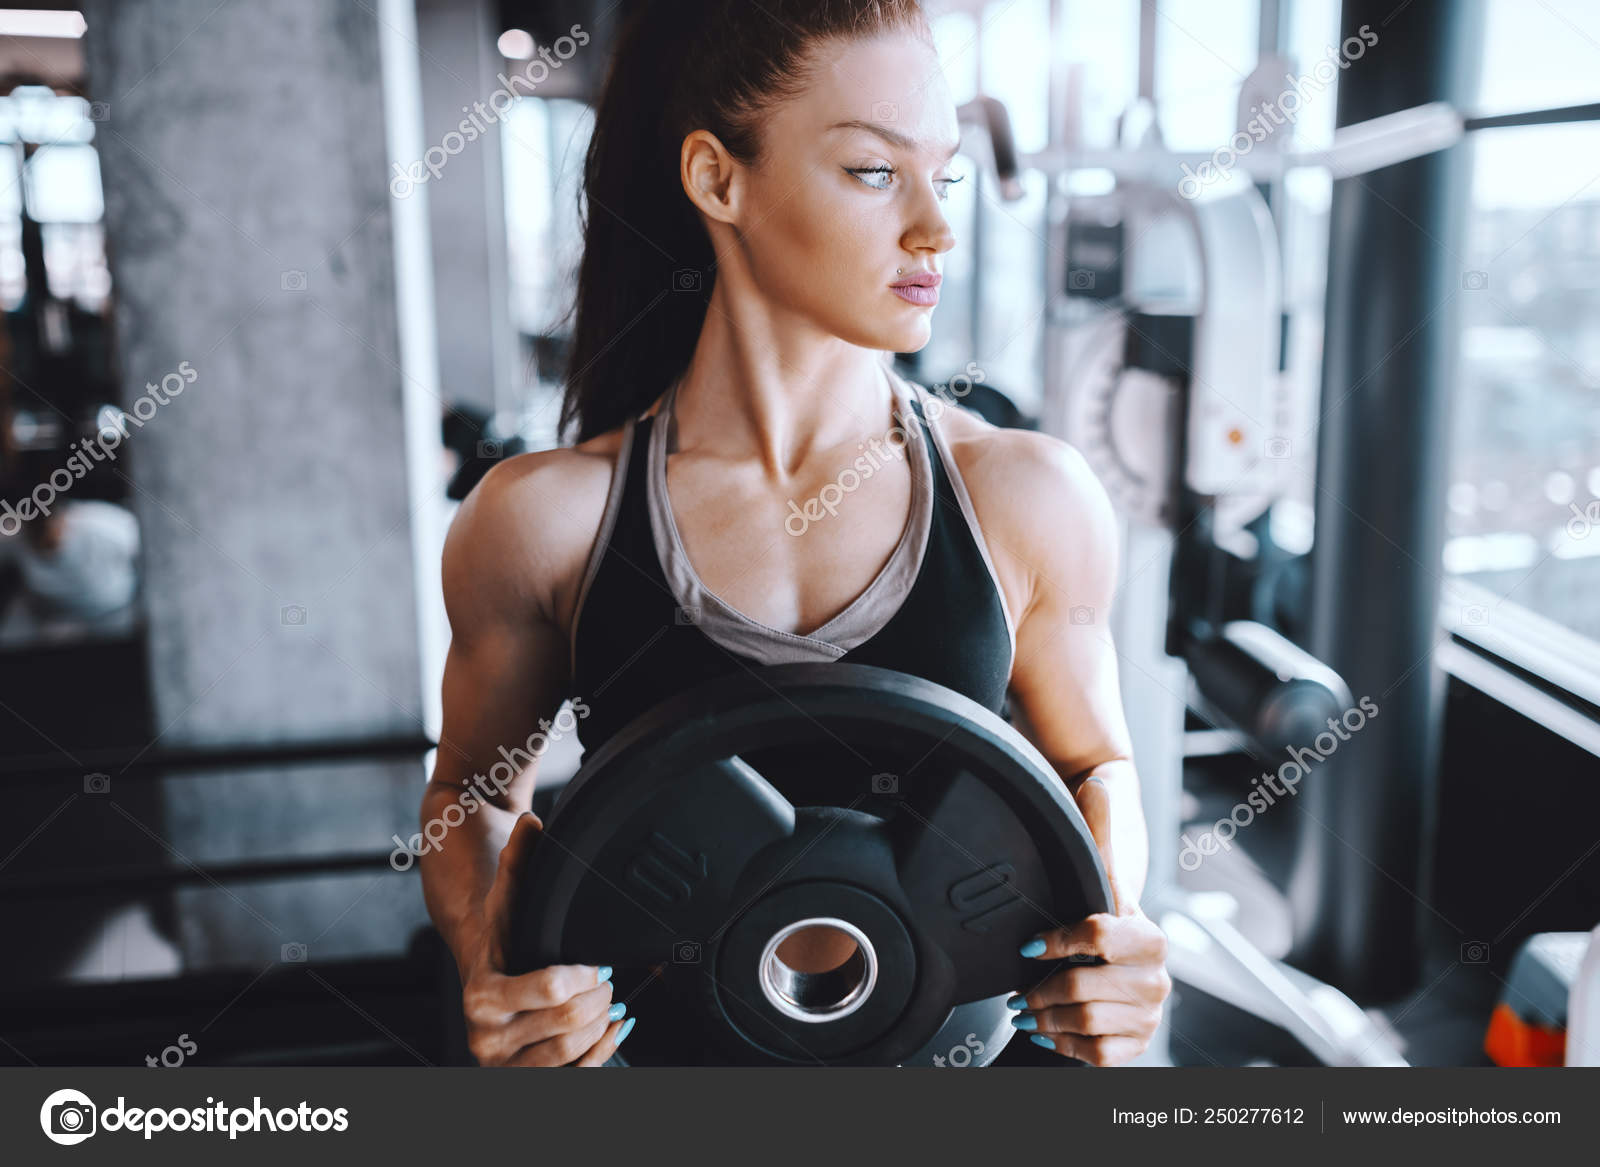 https://st4.depositphotos.com/4259987/25027/i/1600/depositphotos_250277612-stock-photo-young-attractive-caucasian-female-bodybuilder.jpg